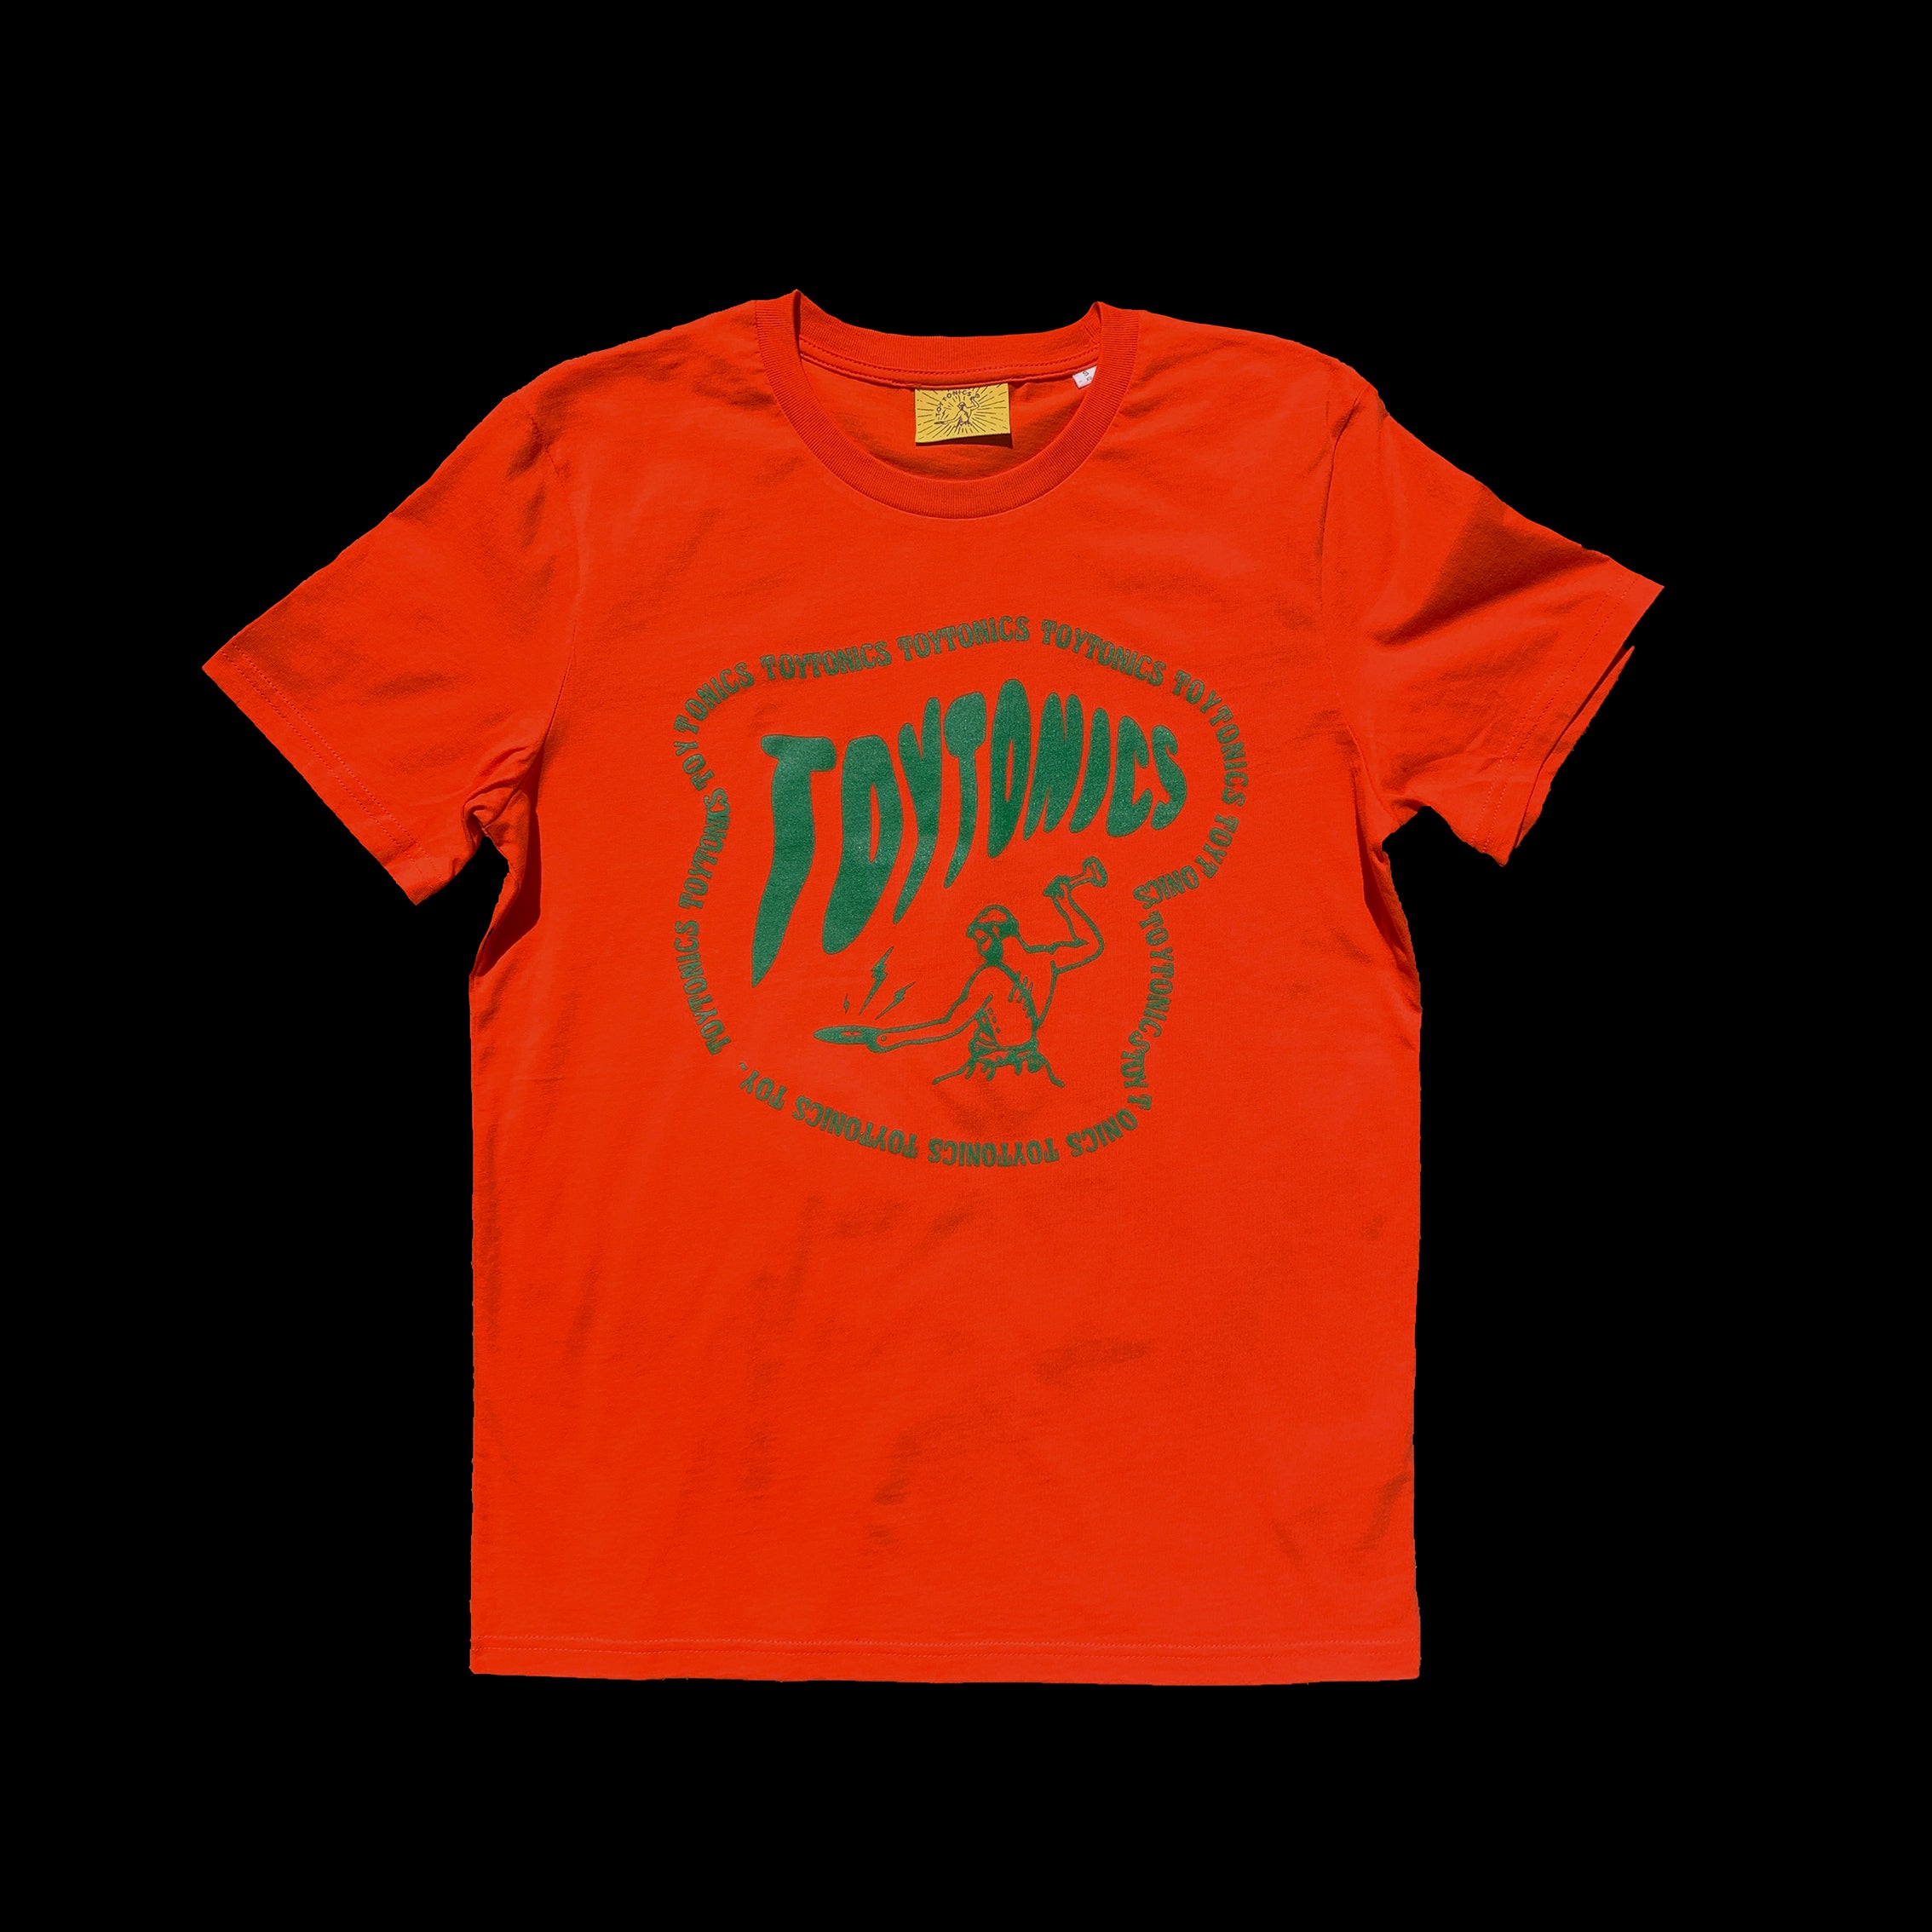 Wobble shirt orange – Limited to 150